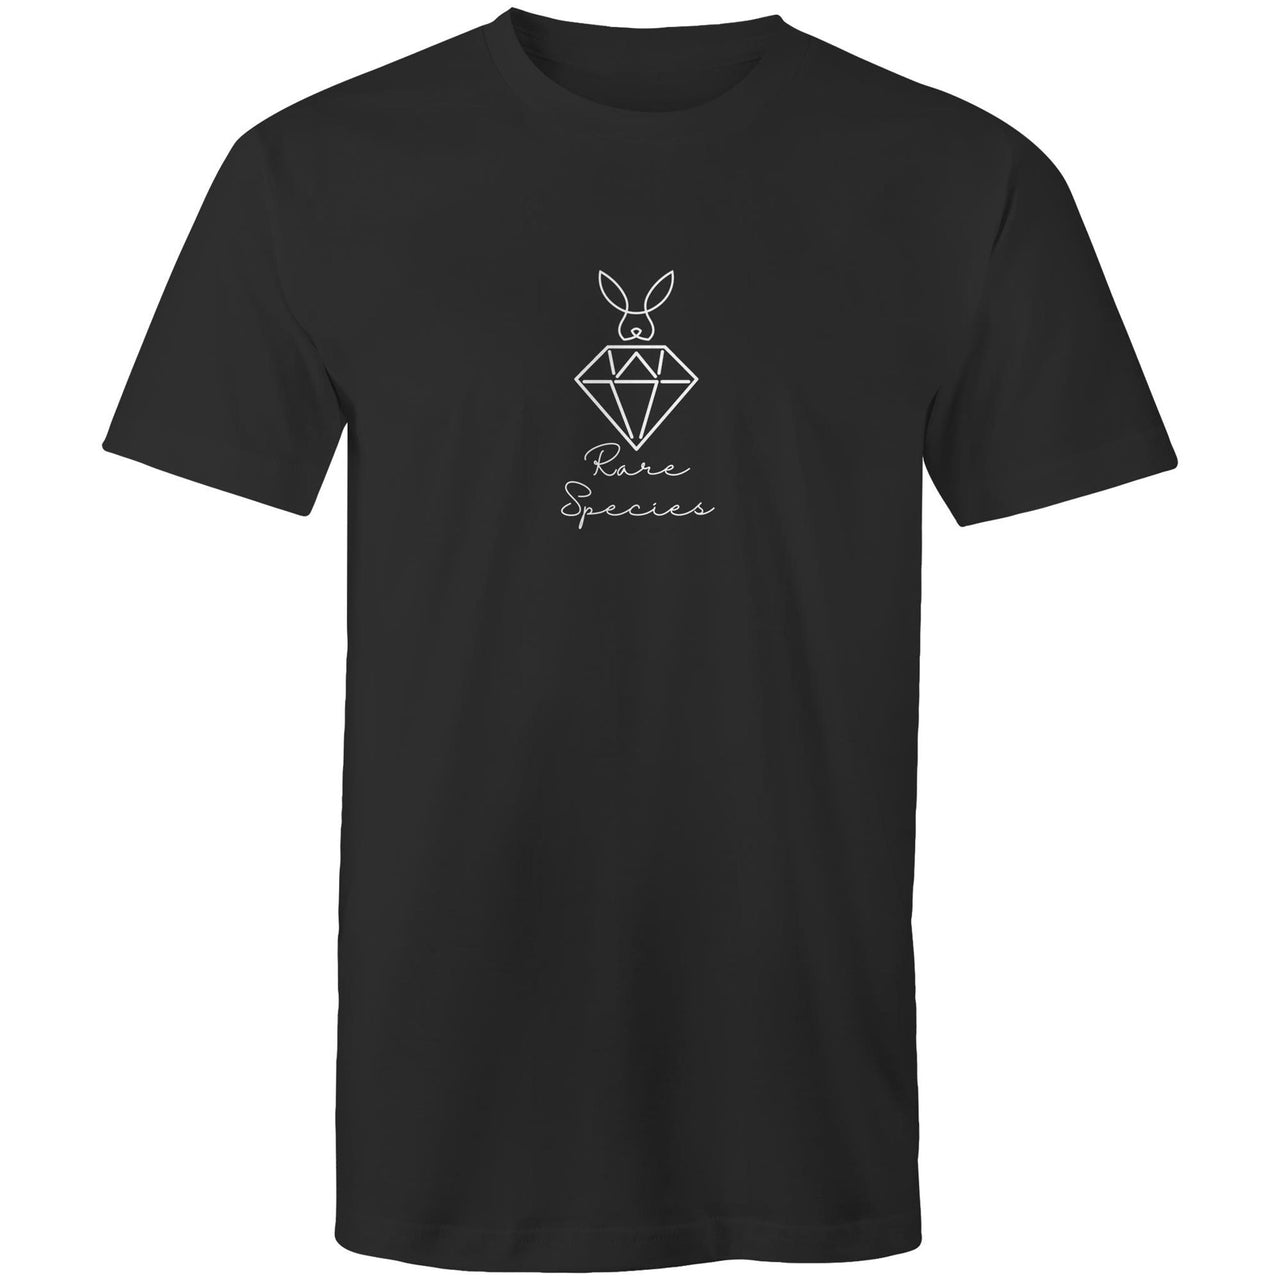 CBF Rare Species Crew T-Shirt Black by CBF Clothing